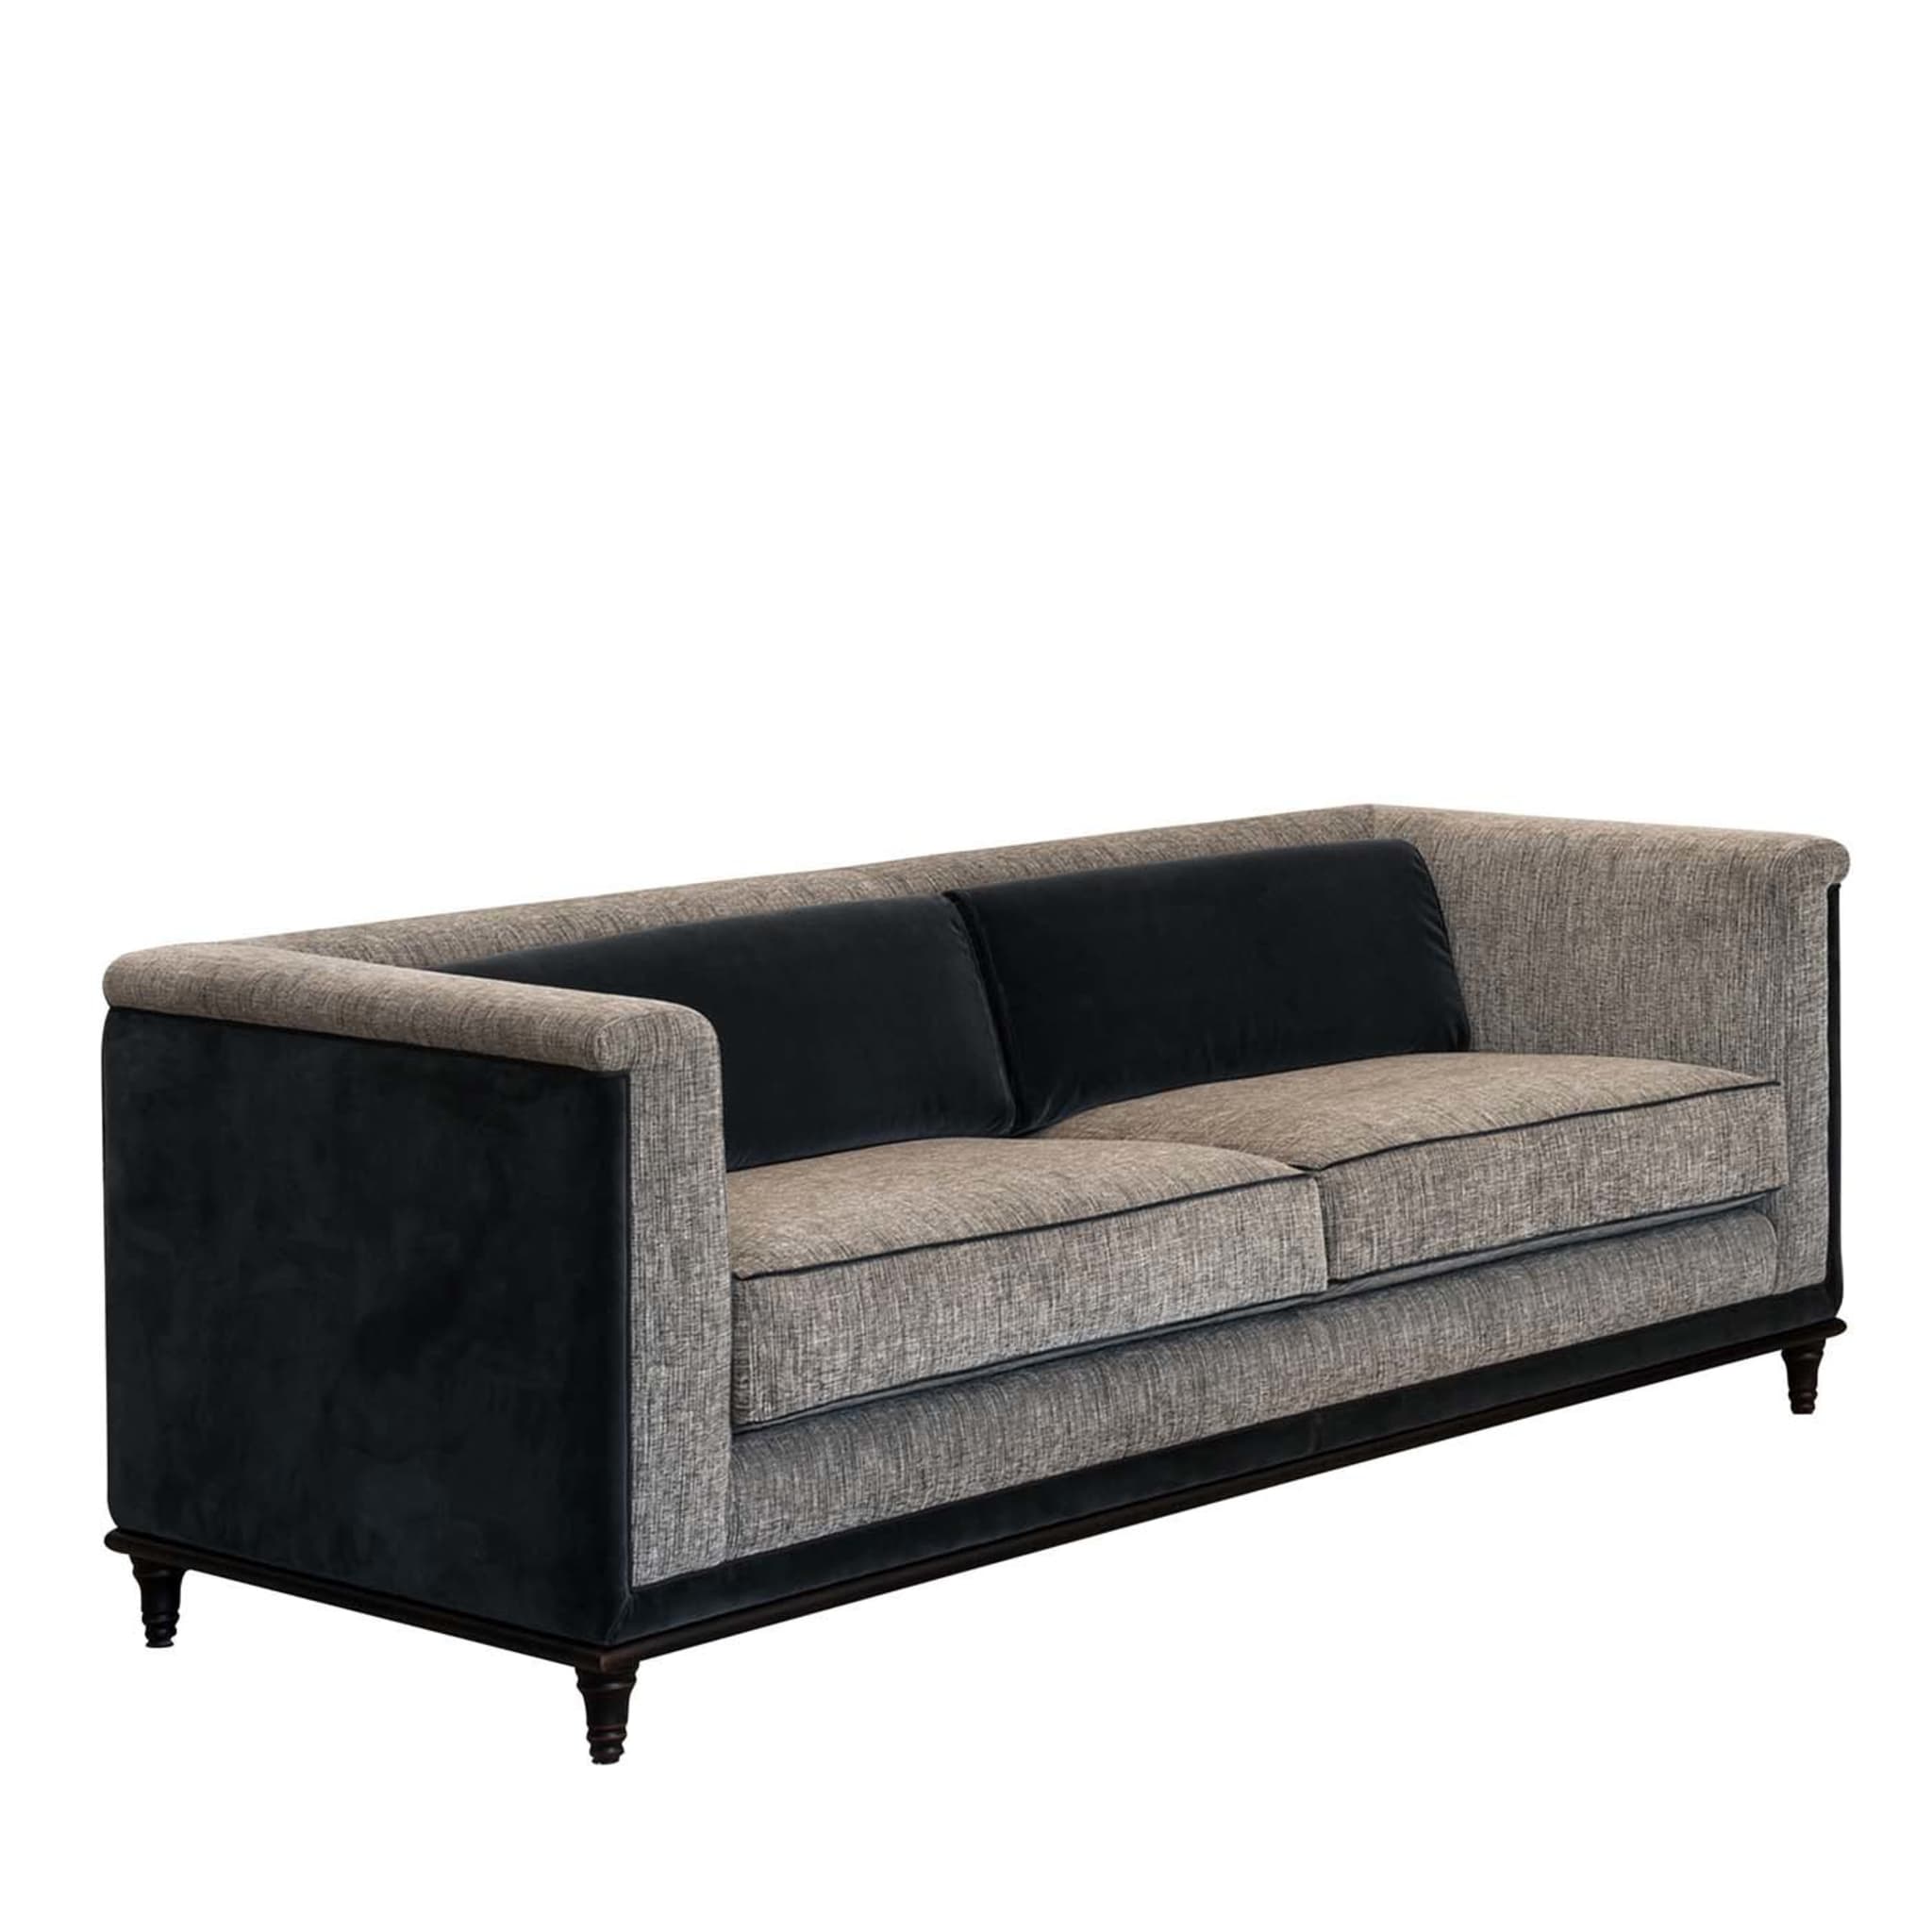 Balmoral 2-Sitzer Sofa Couture Kollektion #2 - Hauptansicht